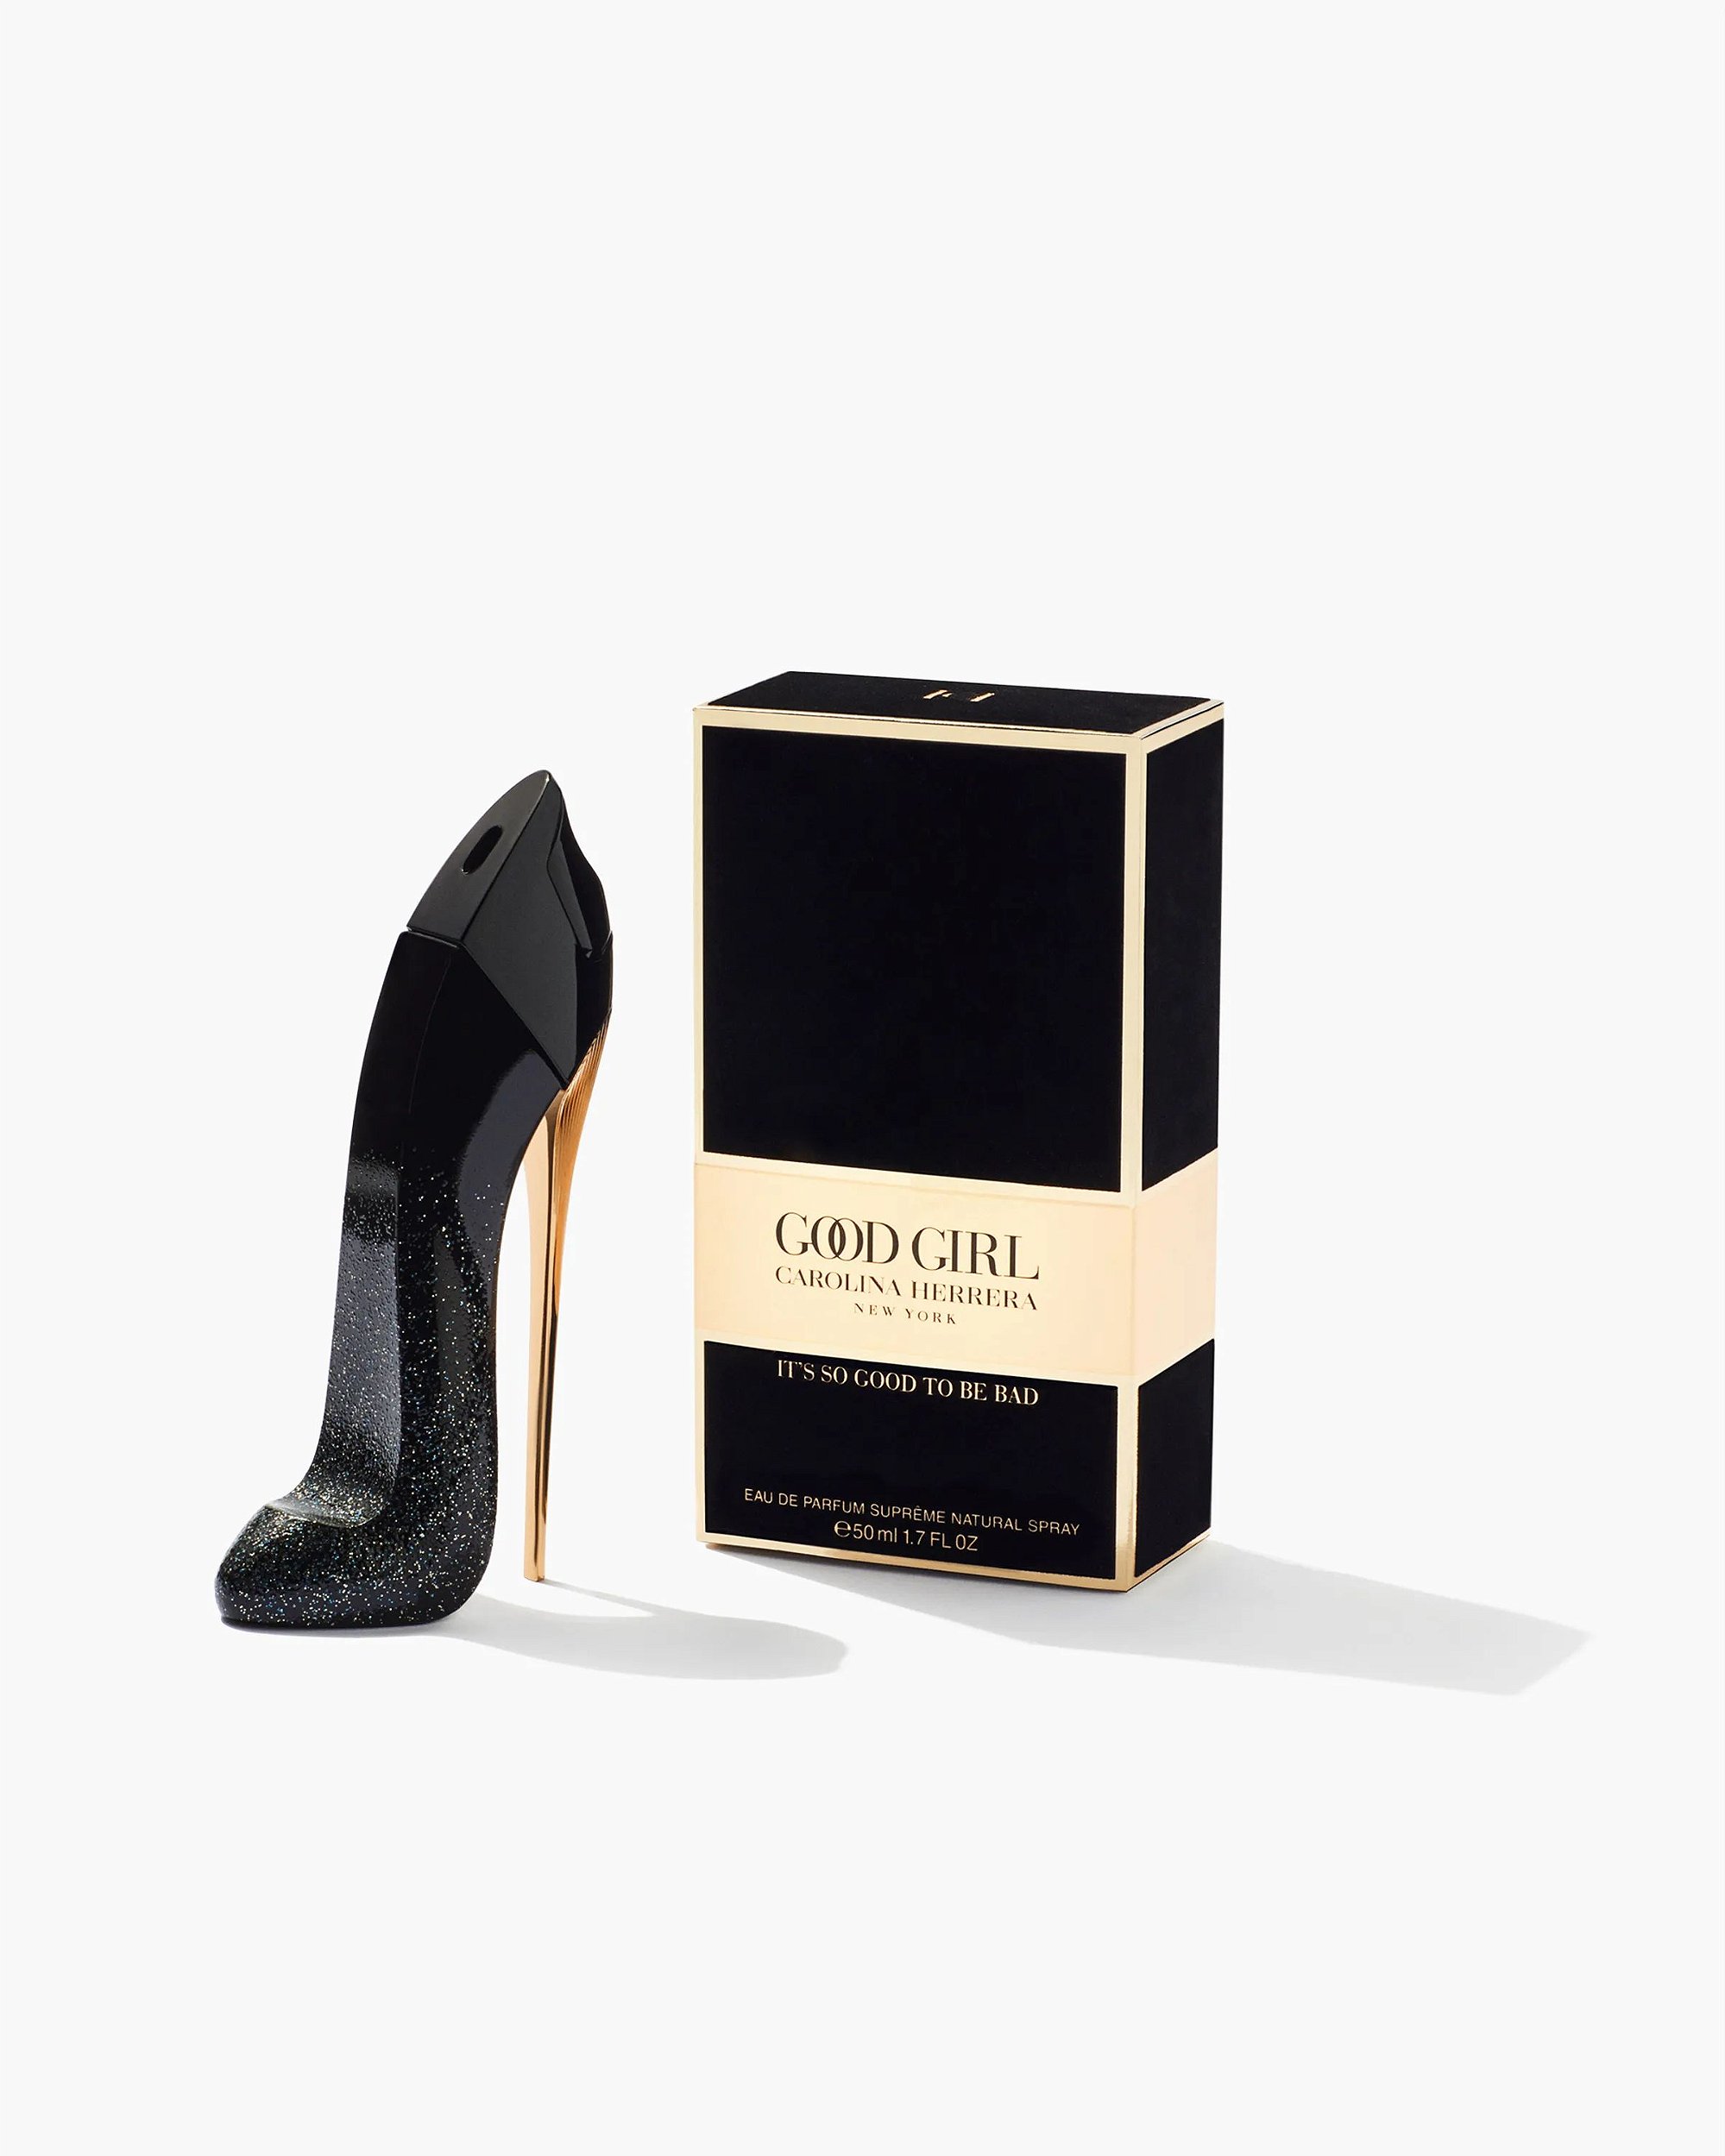 Carolina Herrera Good Girl Eau de Parfum Suprême 50ml (1.7fl oz)